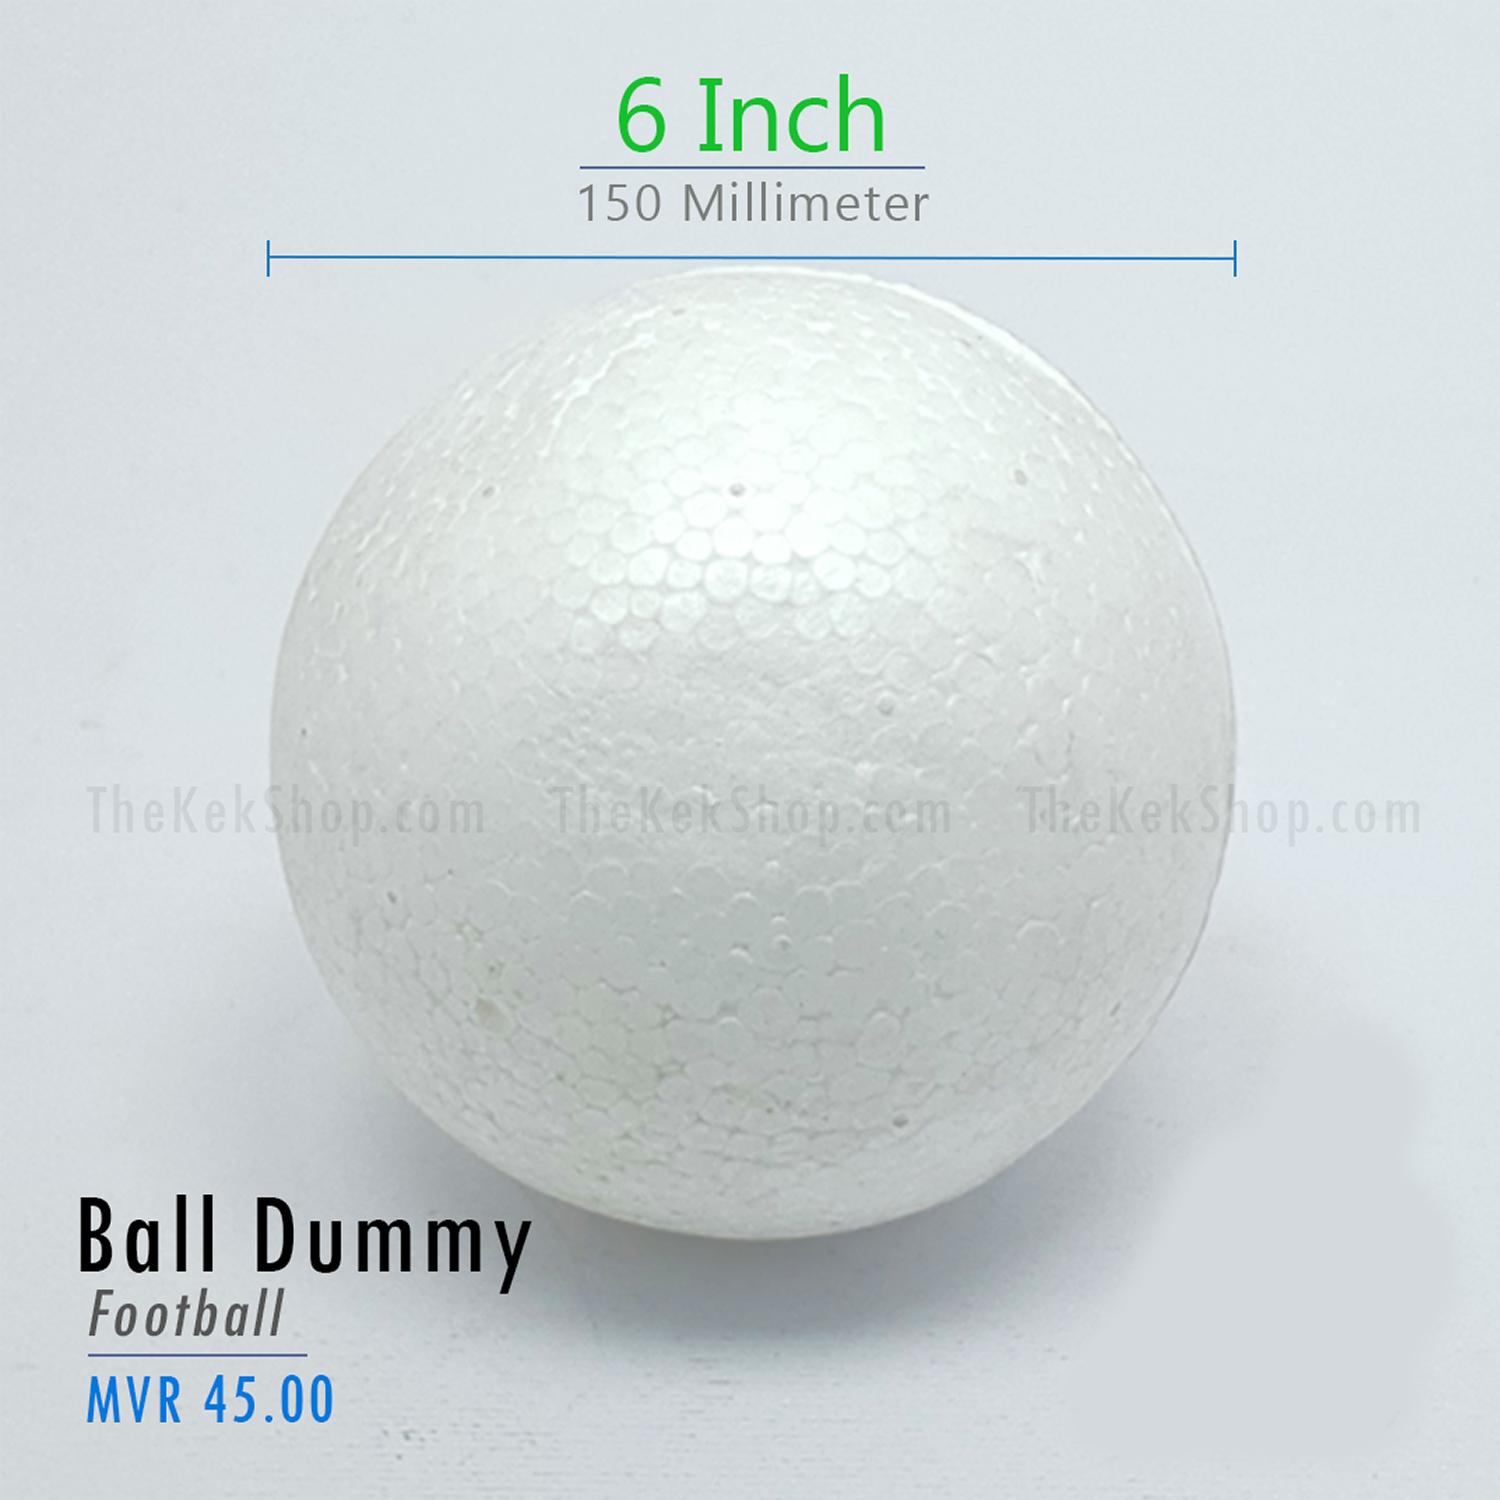 6" DIAMETER BALL DUMMY